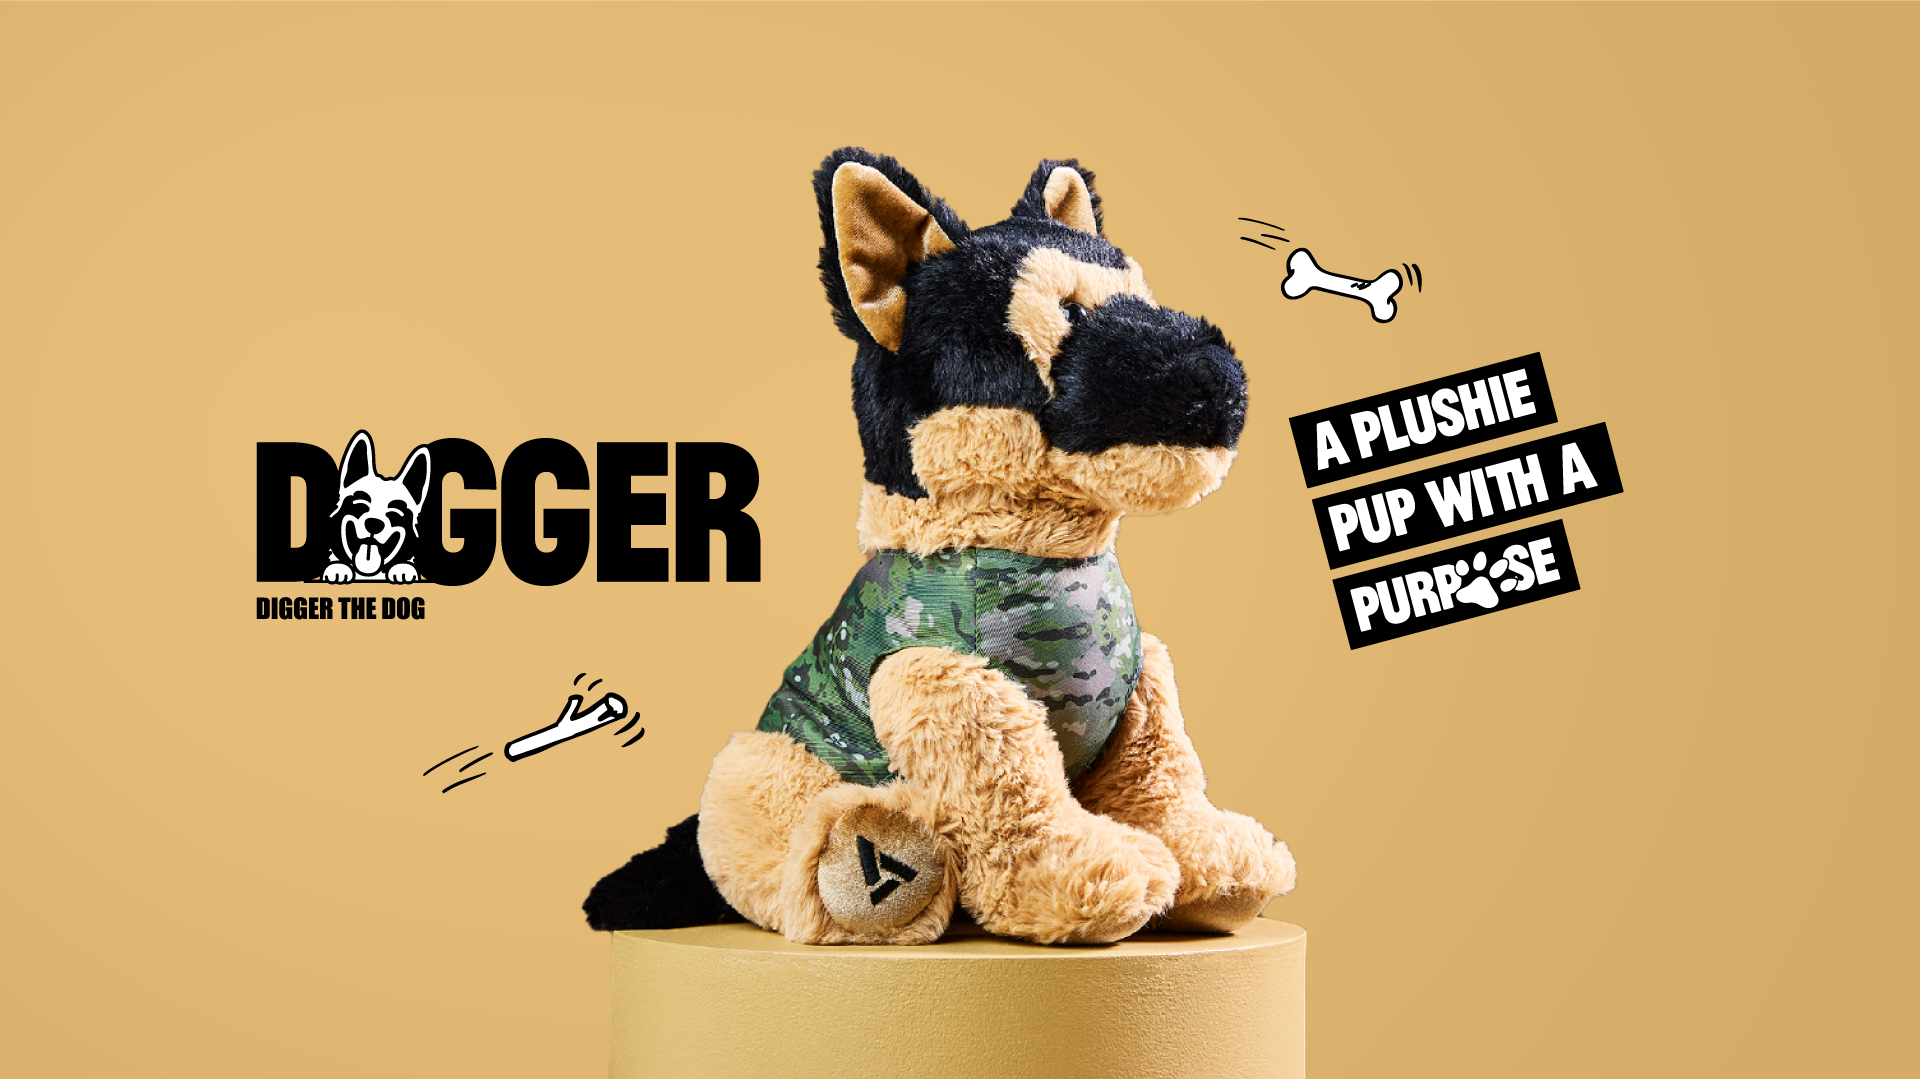 LEGEAR_EDM-Digger_the_dog-v2_ADA-web-banner-desktop-2